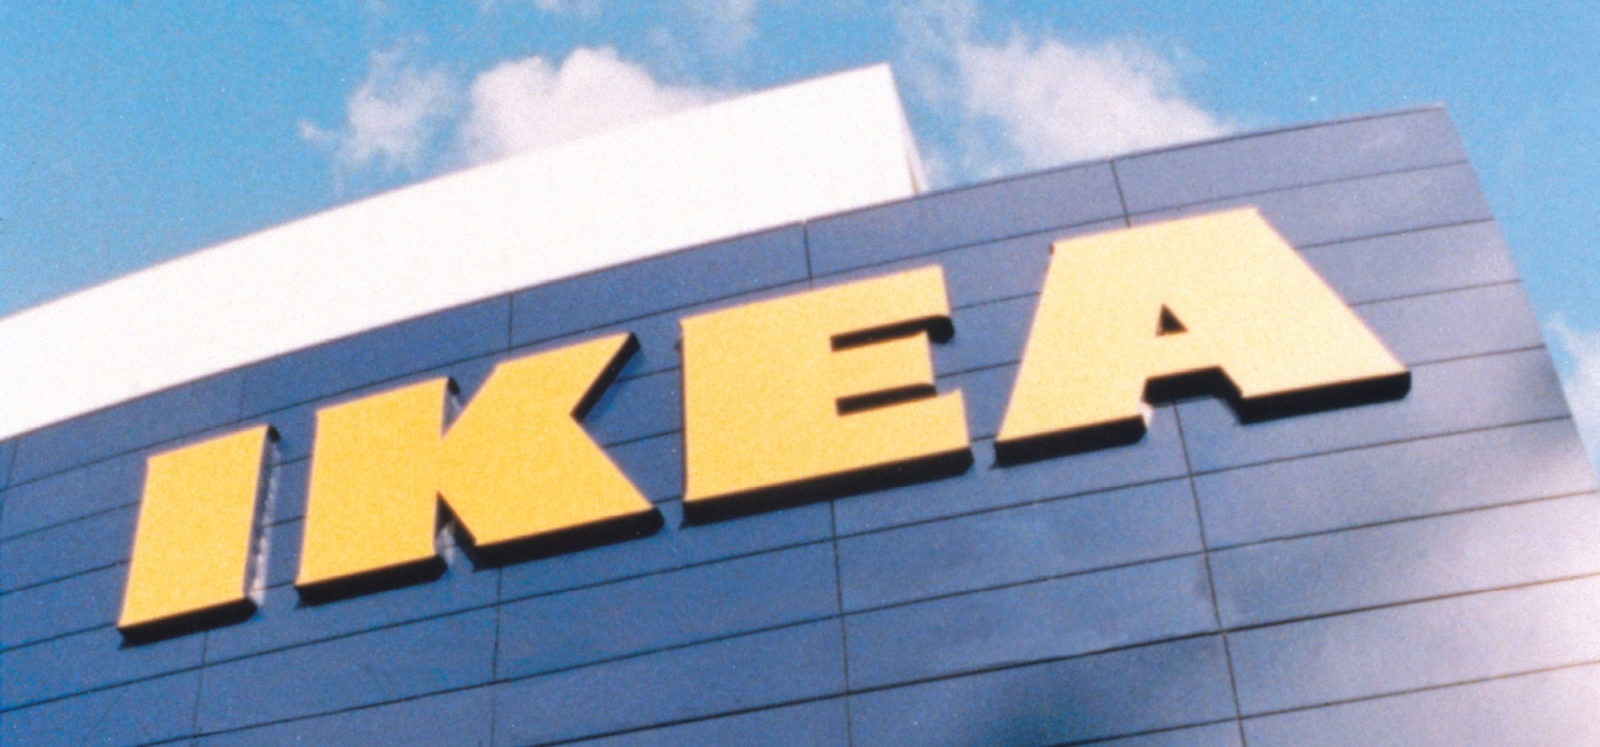 History of the IKEA logotype - IKEA Museum